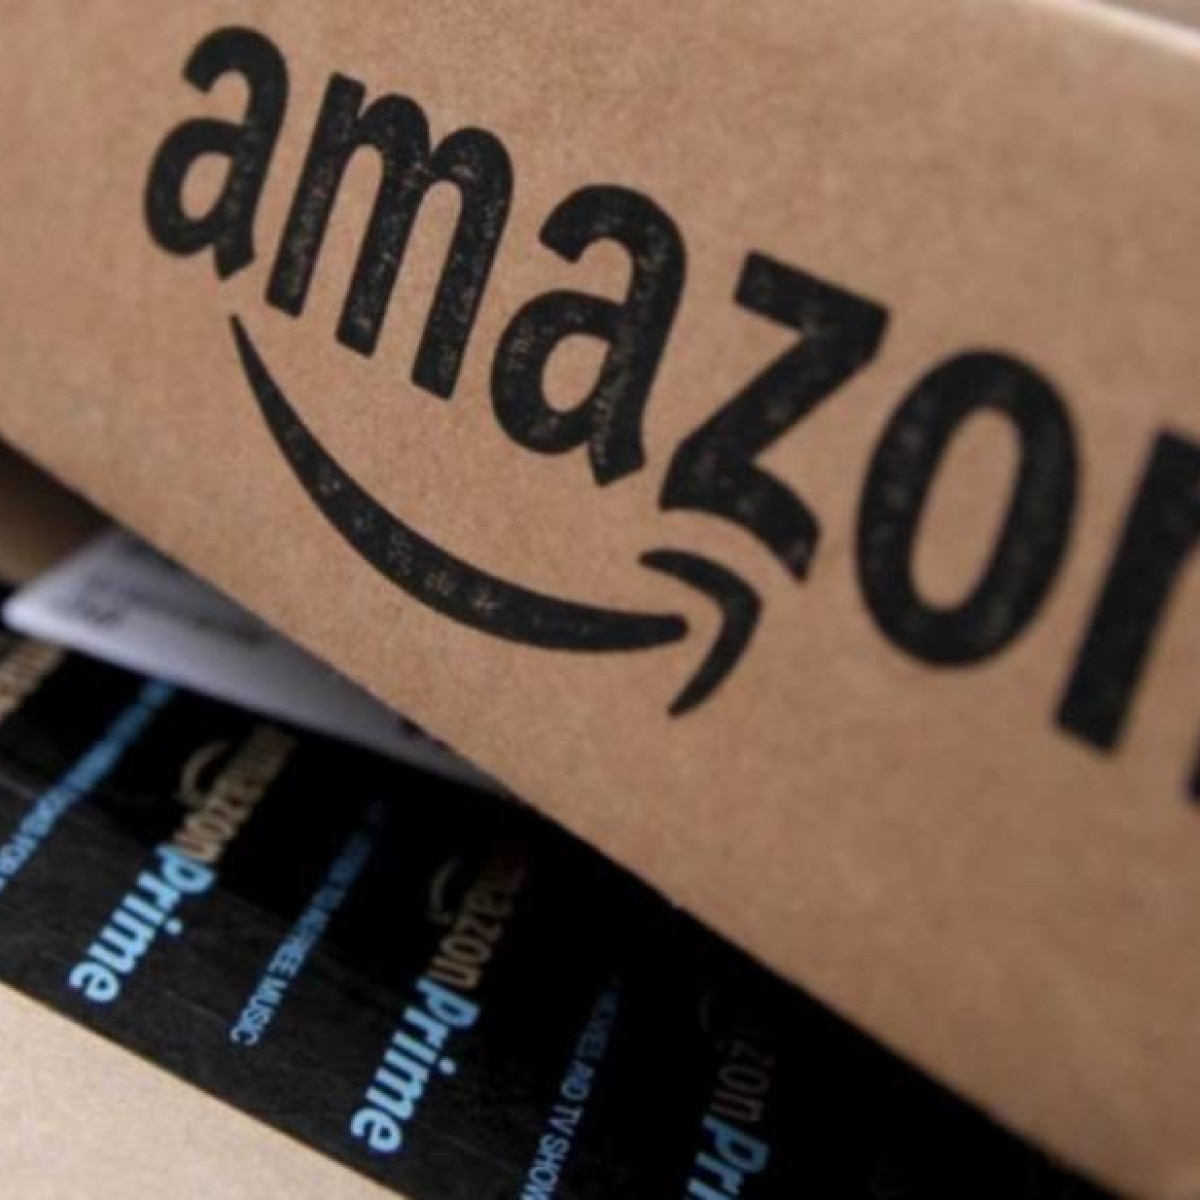 Amazon Prime Servico Chega Ao Brasil Com Frete Gratis E Streaming